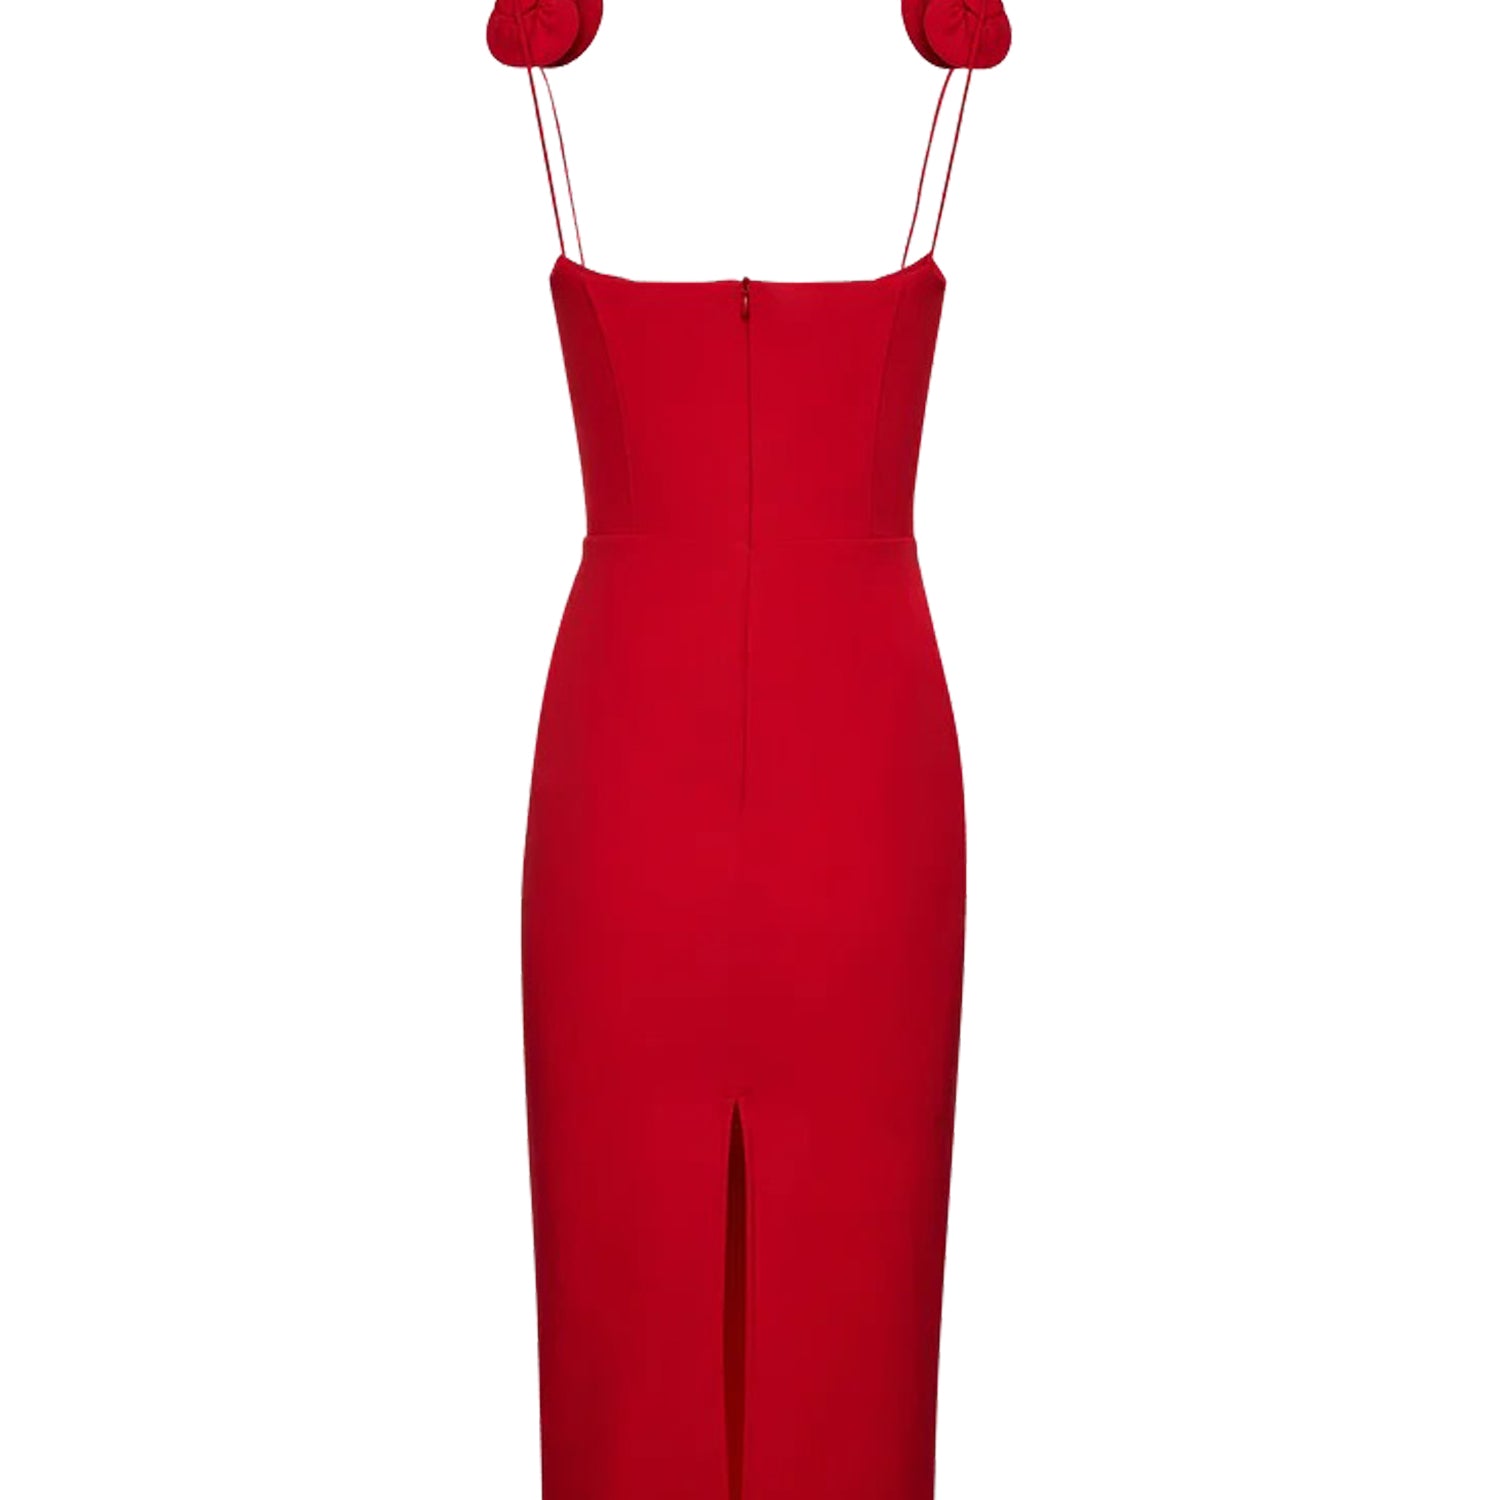 Bustier midi dress in red by Magda Butrym